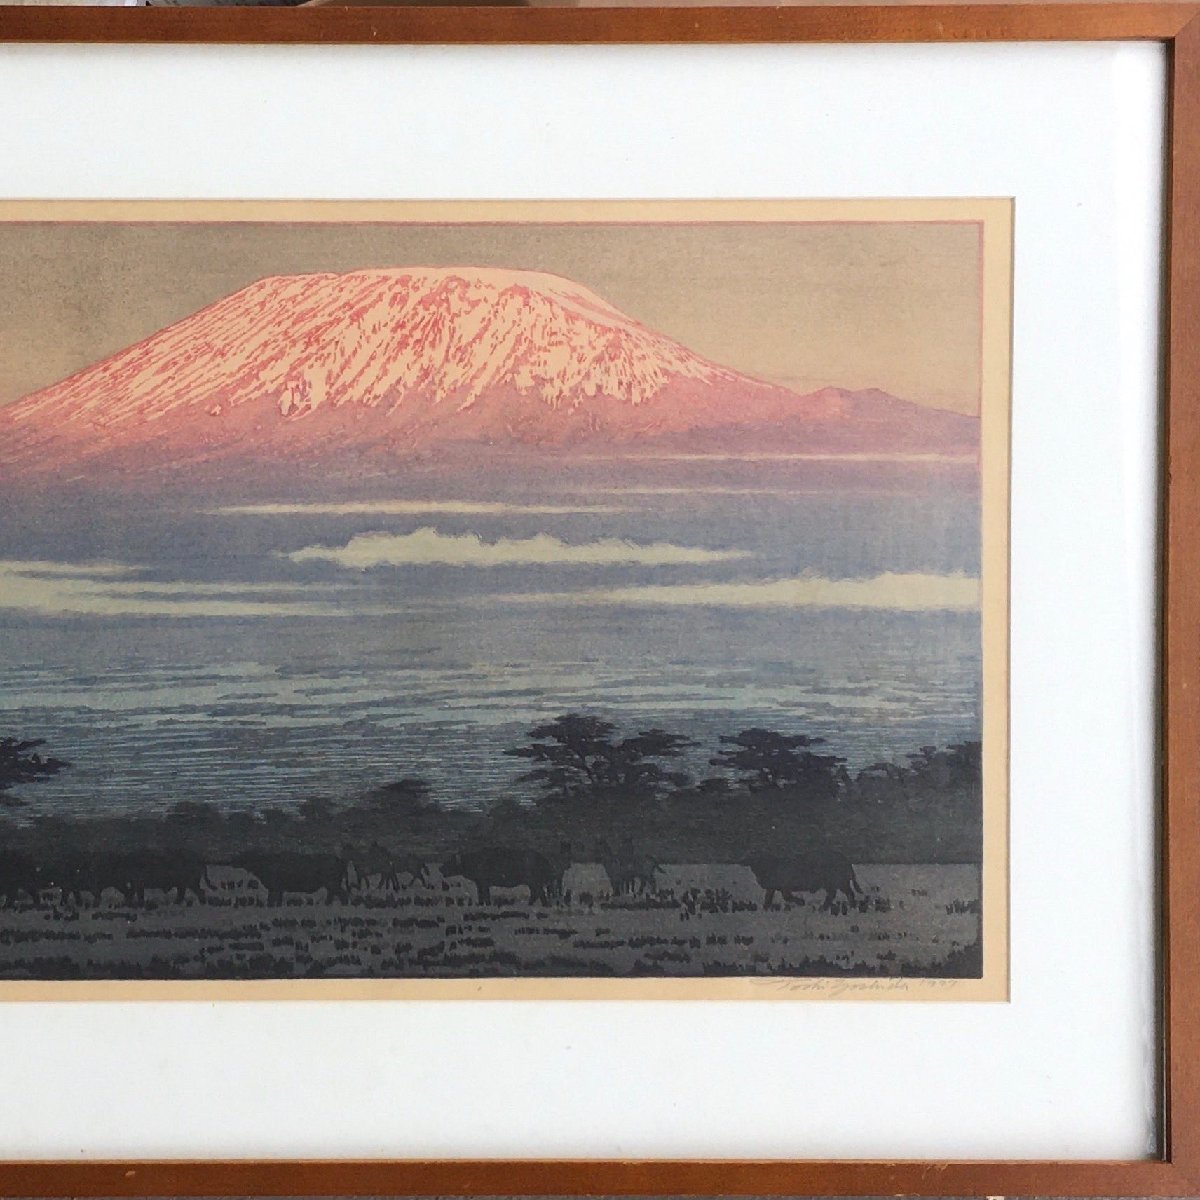  genuine work guarantee goods [ Yoshida .. large size hand .. woodblock print Kilimanjaro. morning limitation 532/600 part ] Showa era 52 year frame autograph autograph * edition * title go in 